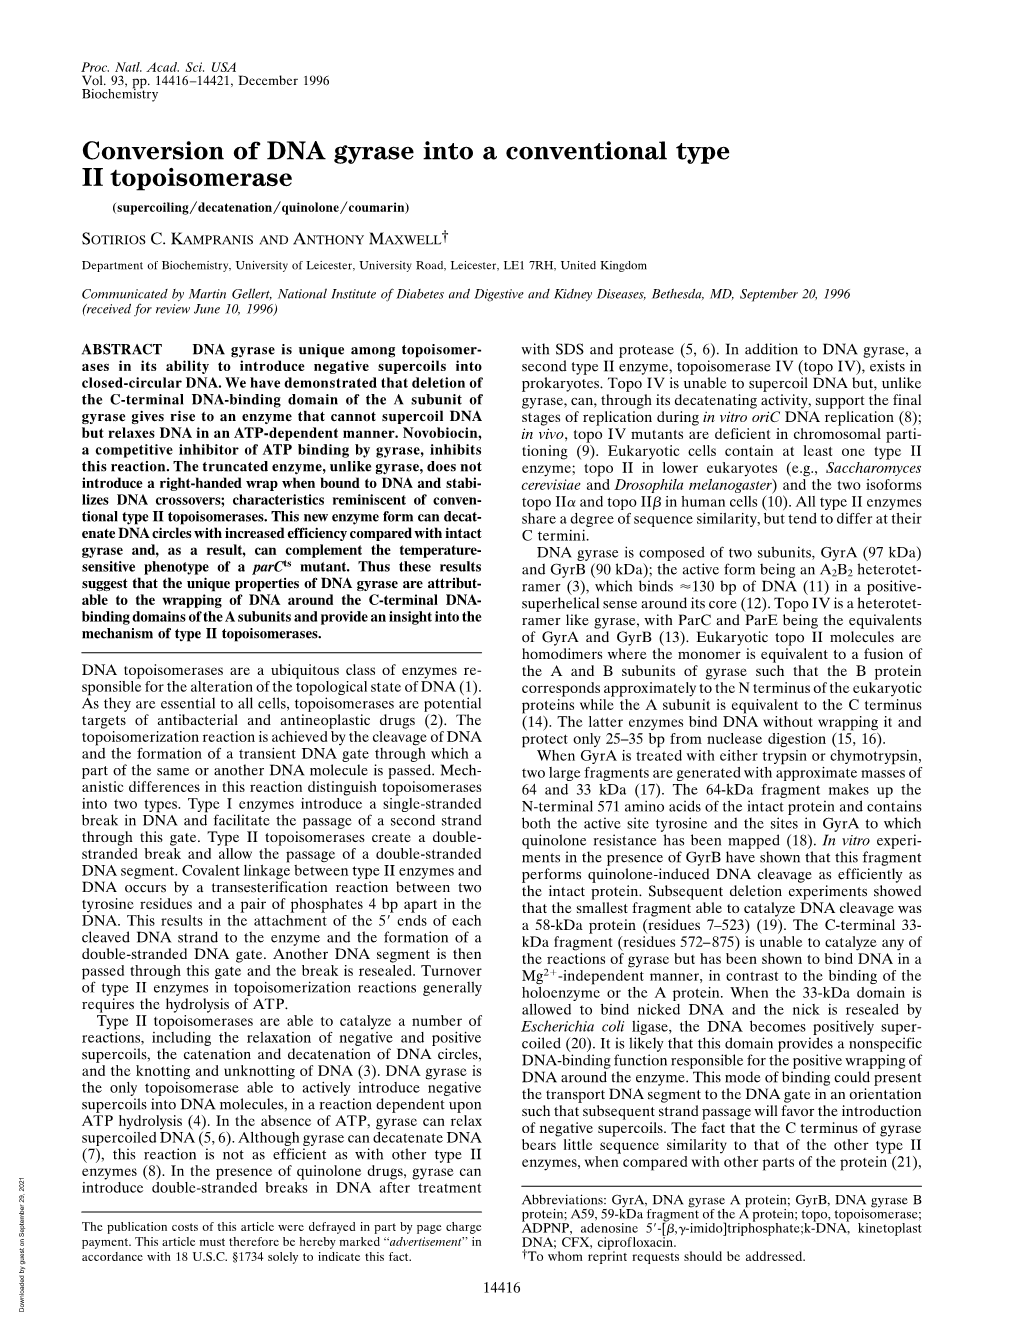 Conversion of DNA Gyrase Into a Conventional Type II Topoisomerase (Supercoiling͞decatenation͞quinolone͞coumarin)